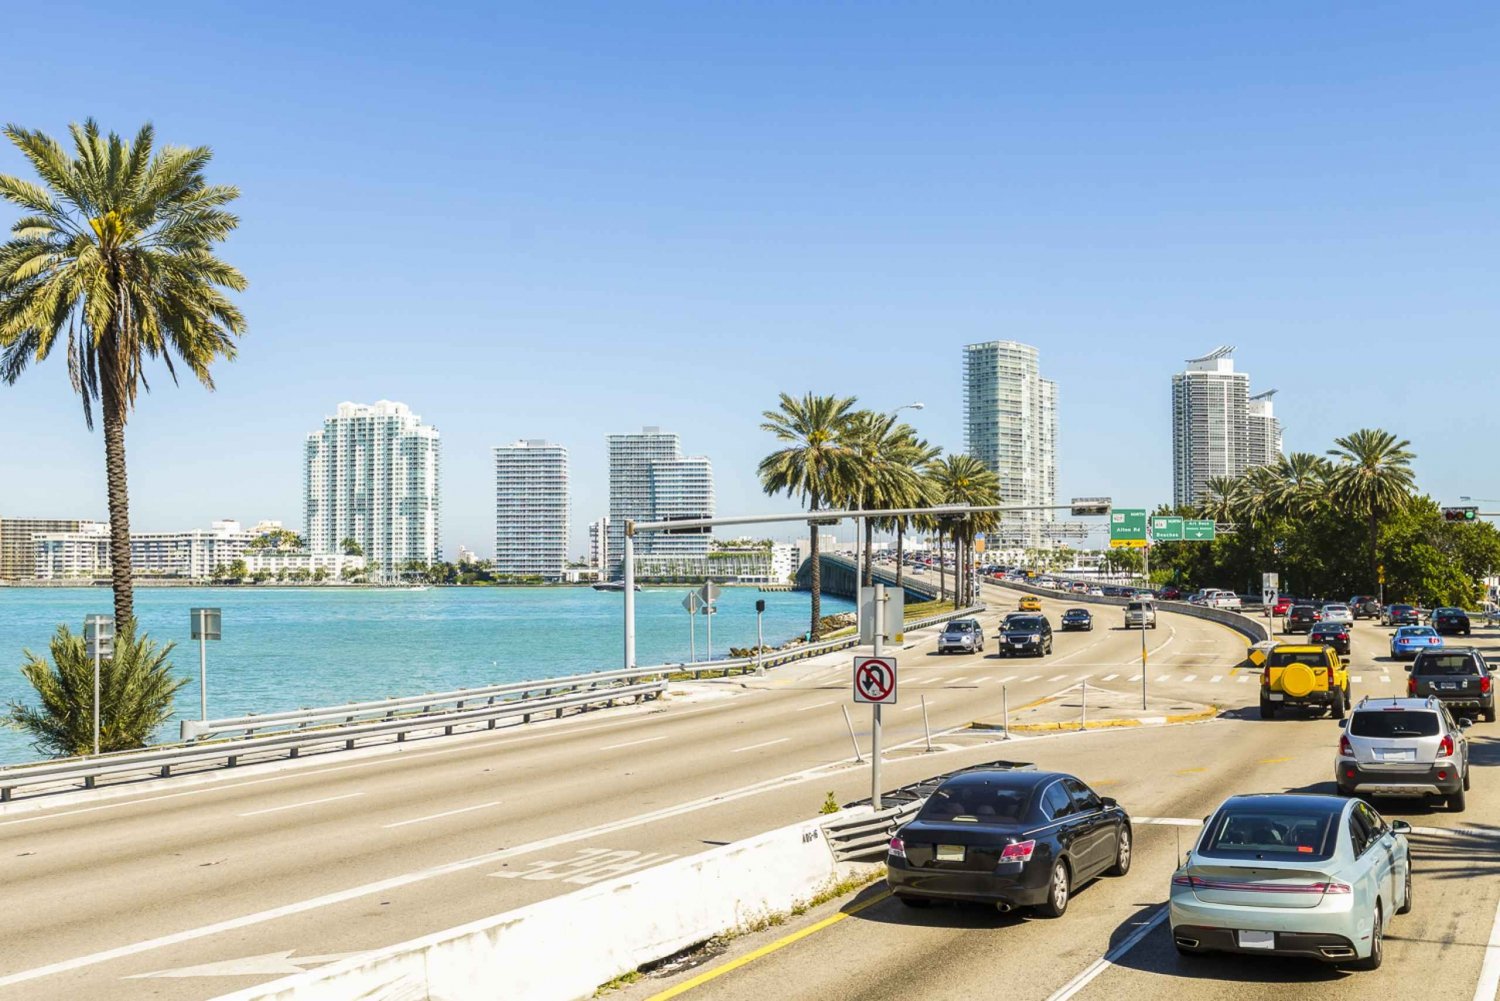 Miami: MIA - Port Everglades or FLL - Port of Miami Transfer